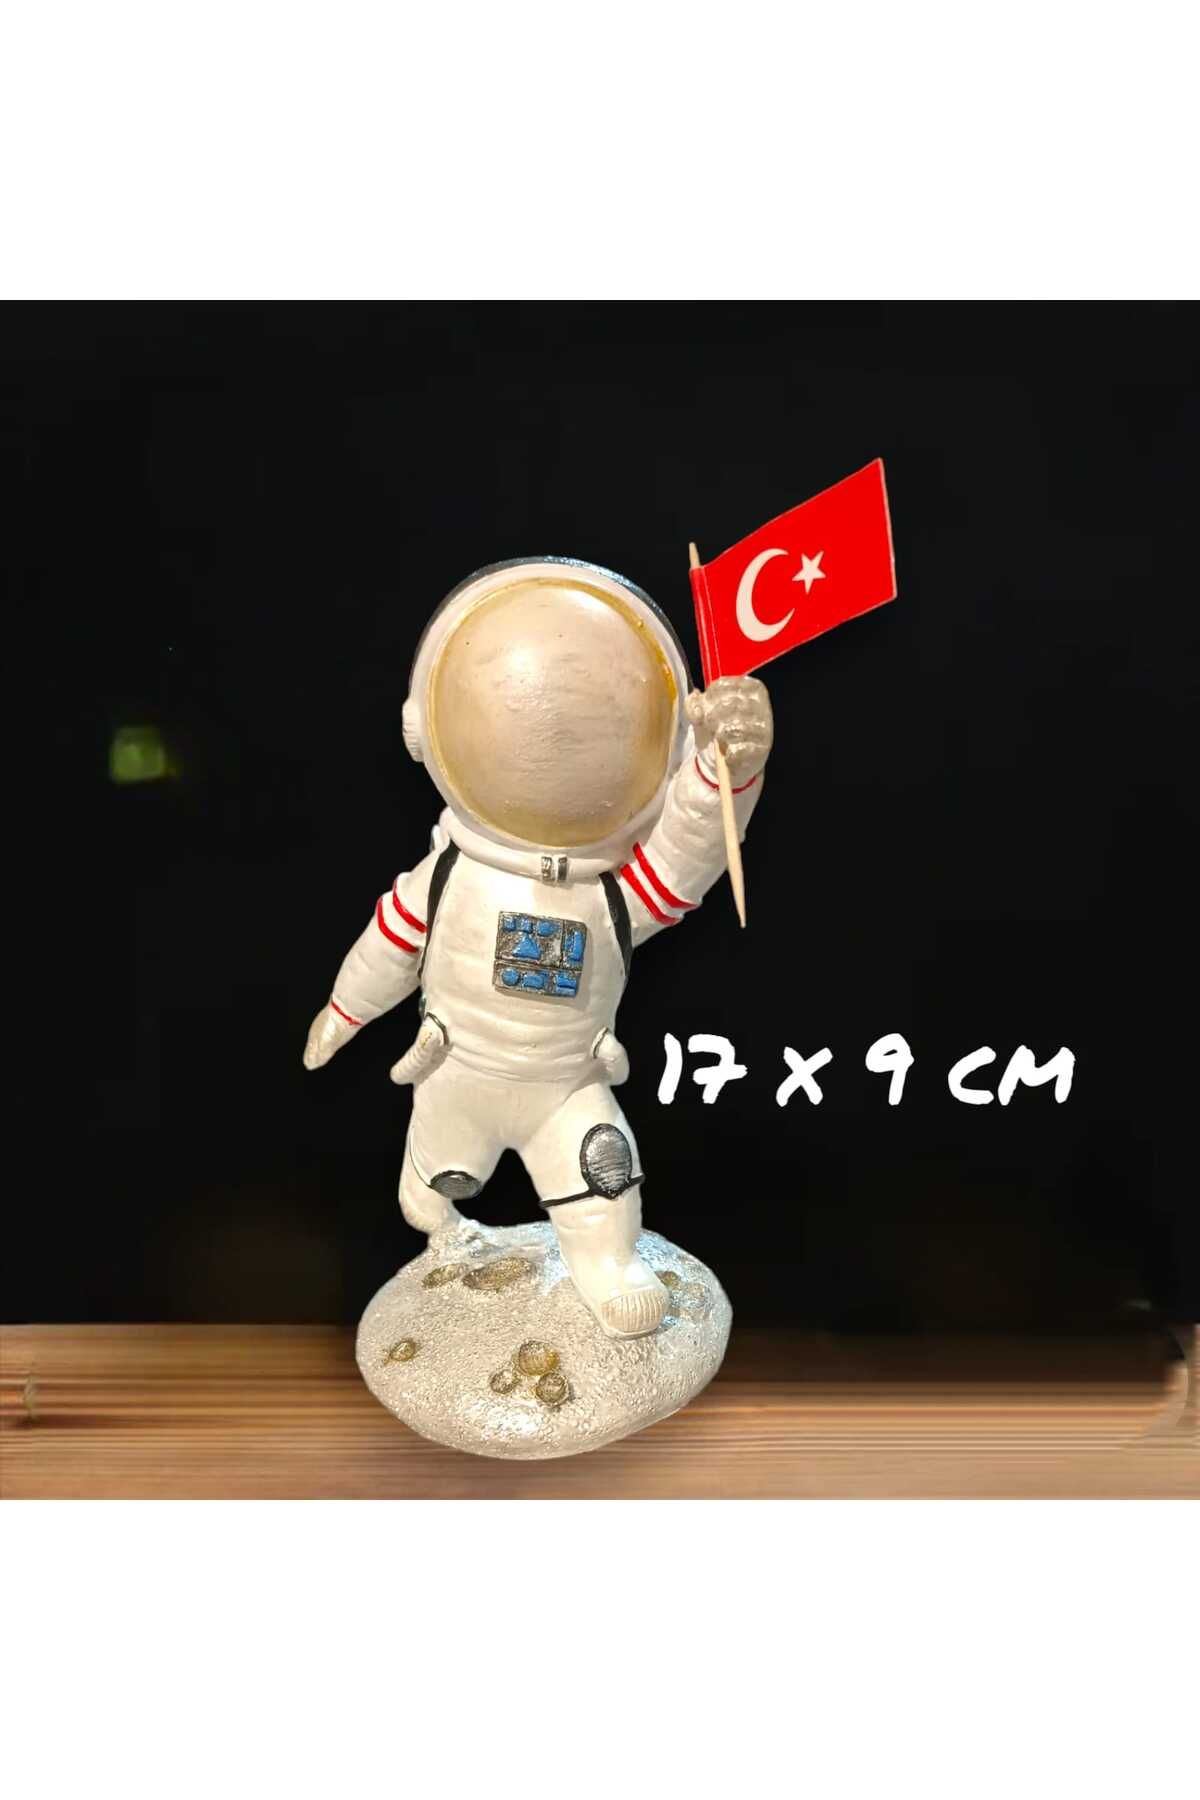 Dodemert Home Türk Bayraklı Astronot Polyester Heykel Biblo